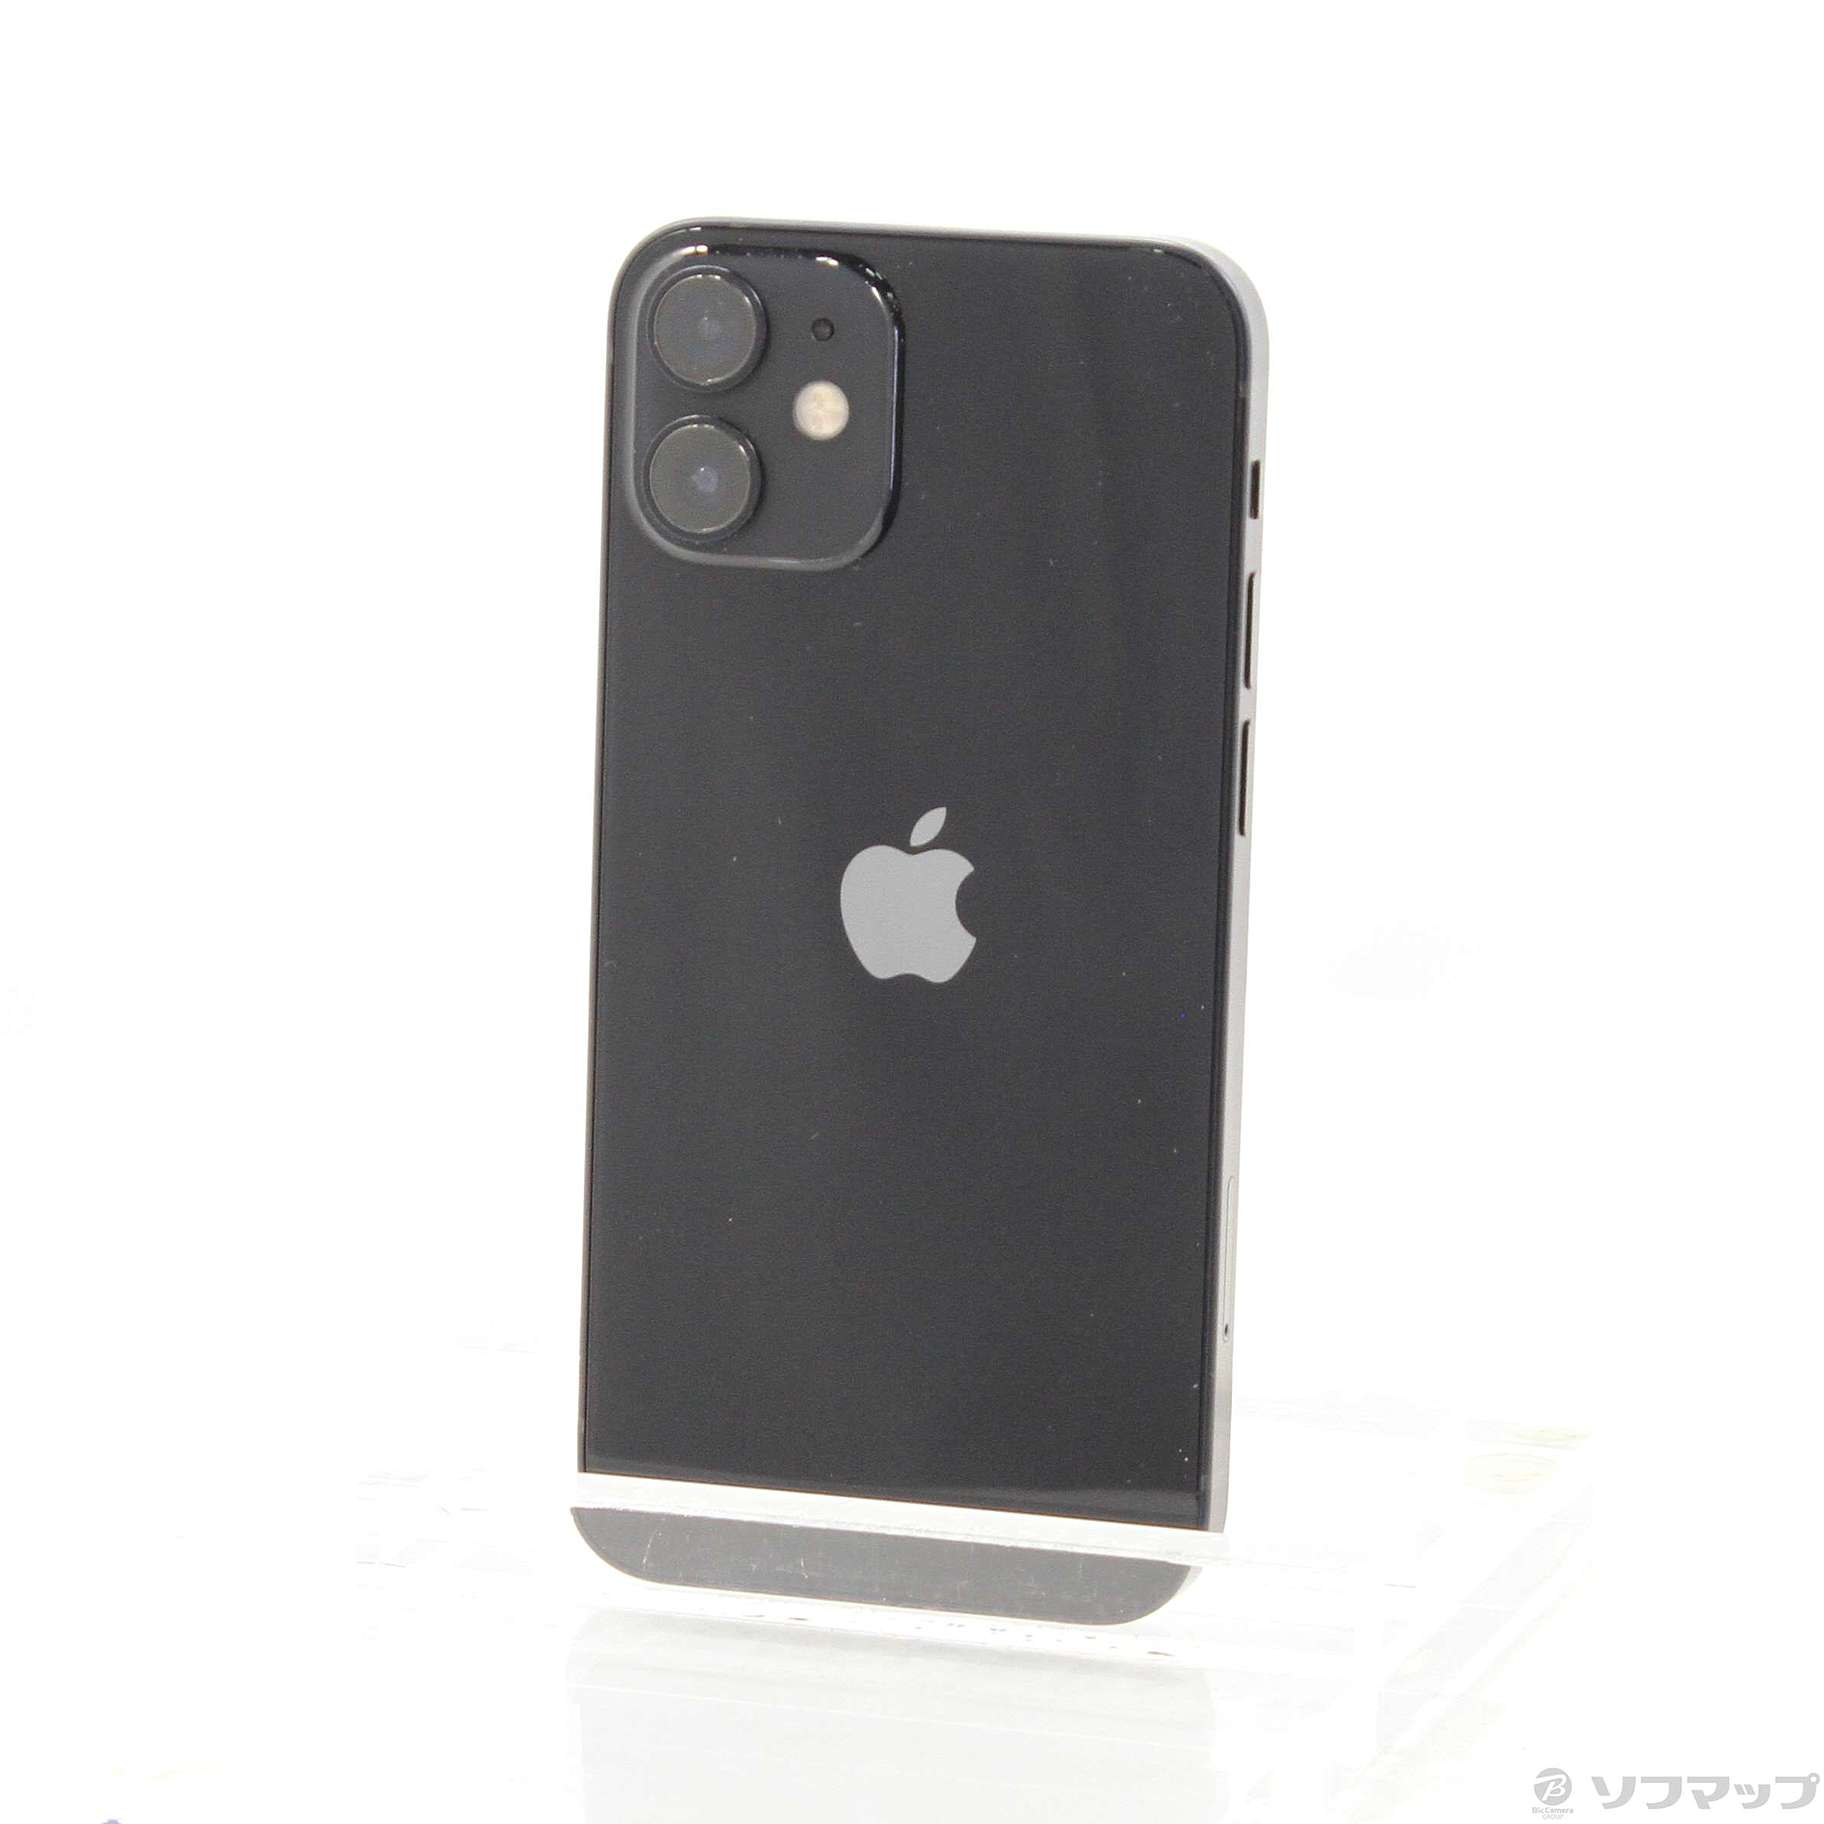 iPhone12 mini SIMフリー256GB black